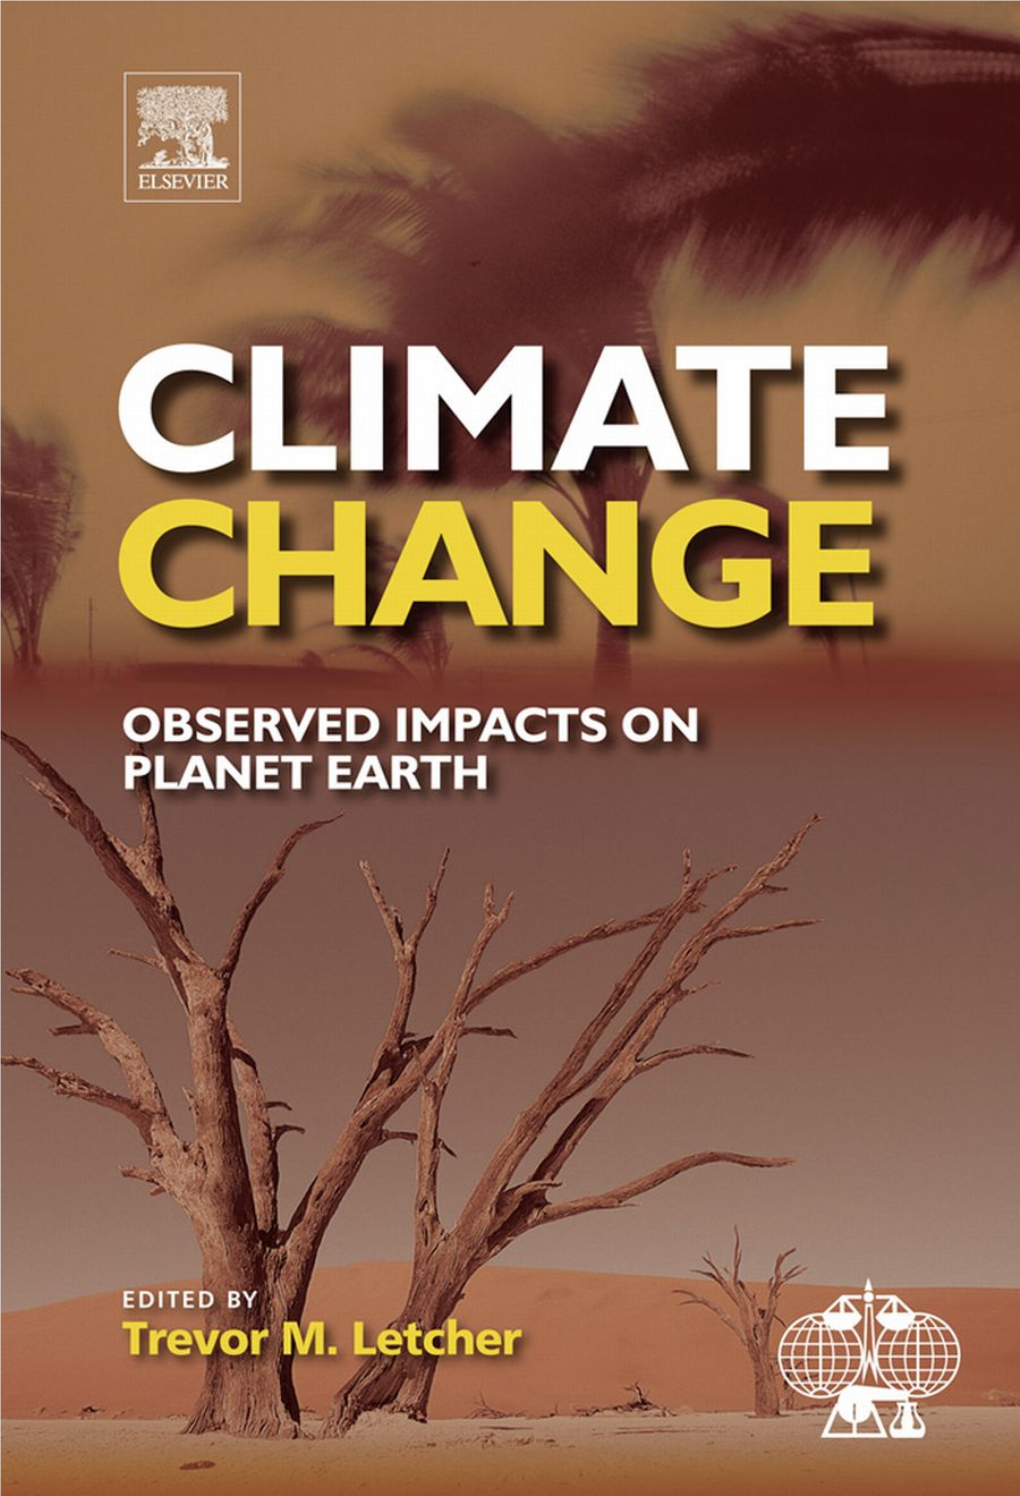 Letcher T. Climate Change (Elsevier, 2009)(ISBN 044453301X)(O